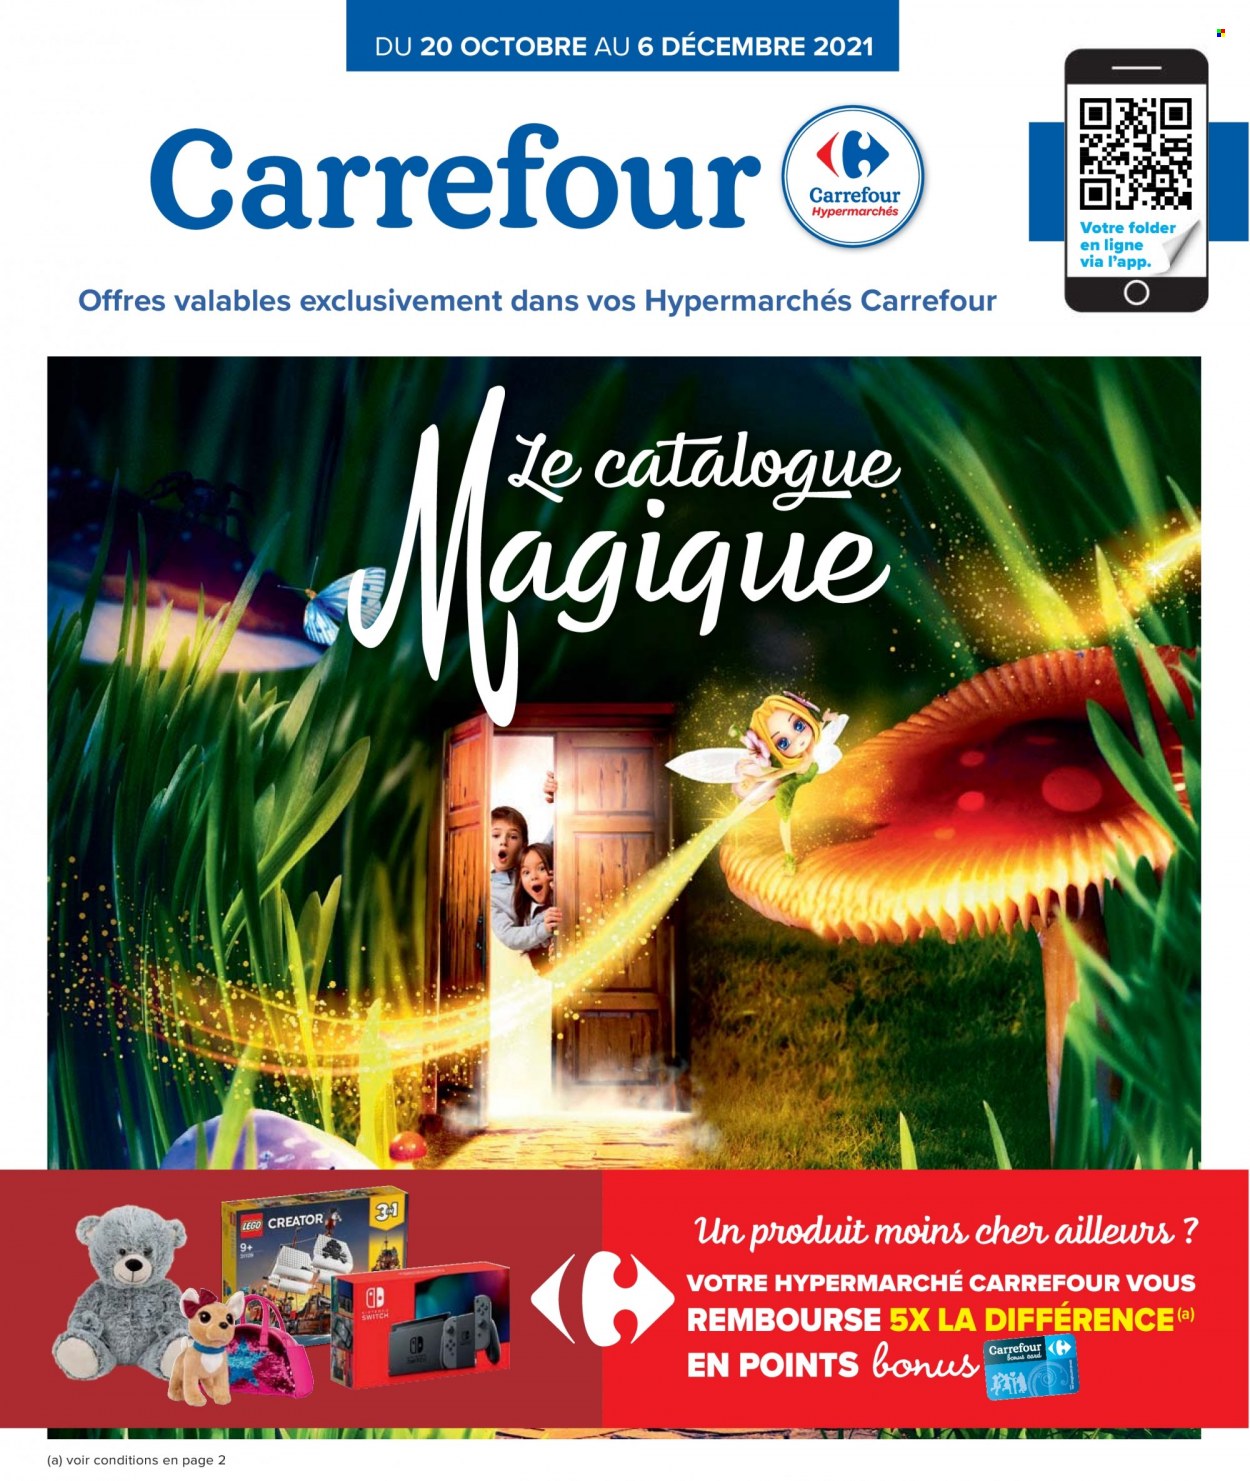 thumbnail - Catalogue Carrefour hypermarkt - 20/10/2021 - 06/12/2021 - Produits soldés - Lego, Lego Creator. Page 1.